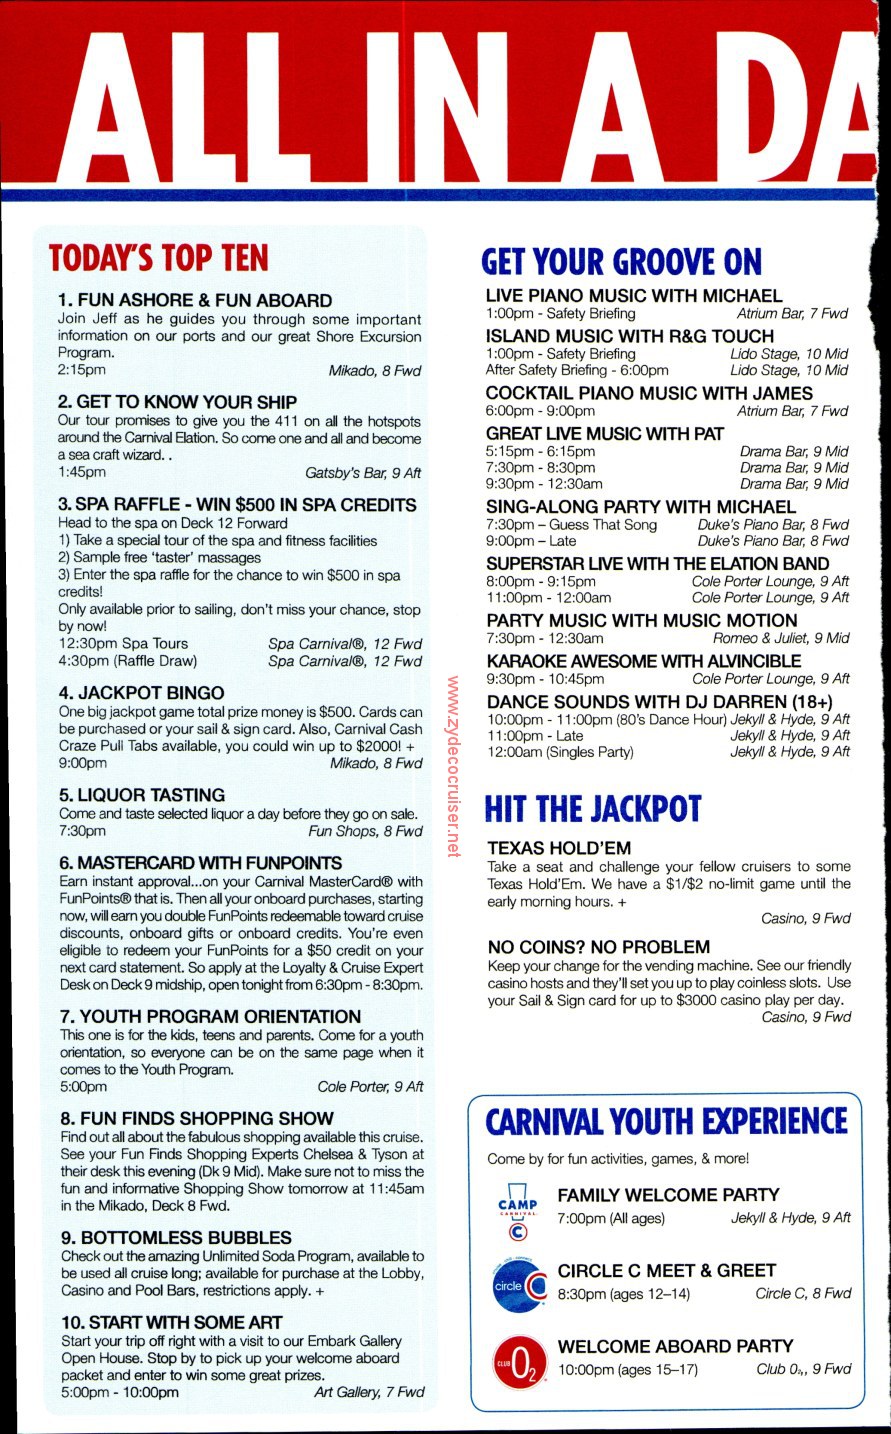 002: Carnival Elation 5 Day Fun Times, Feb 4, 2013, Page 2, 